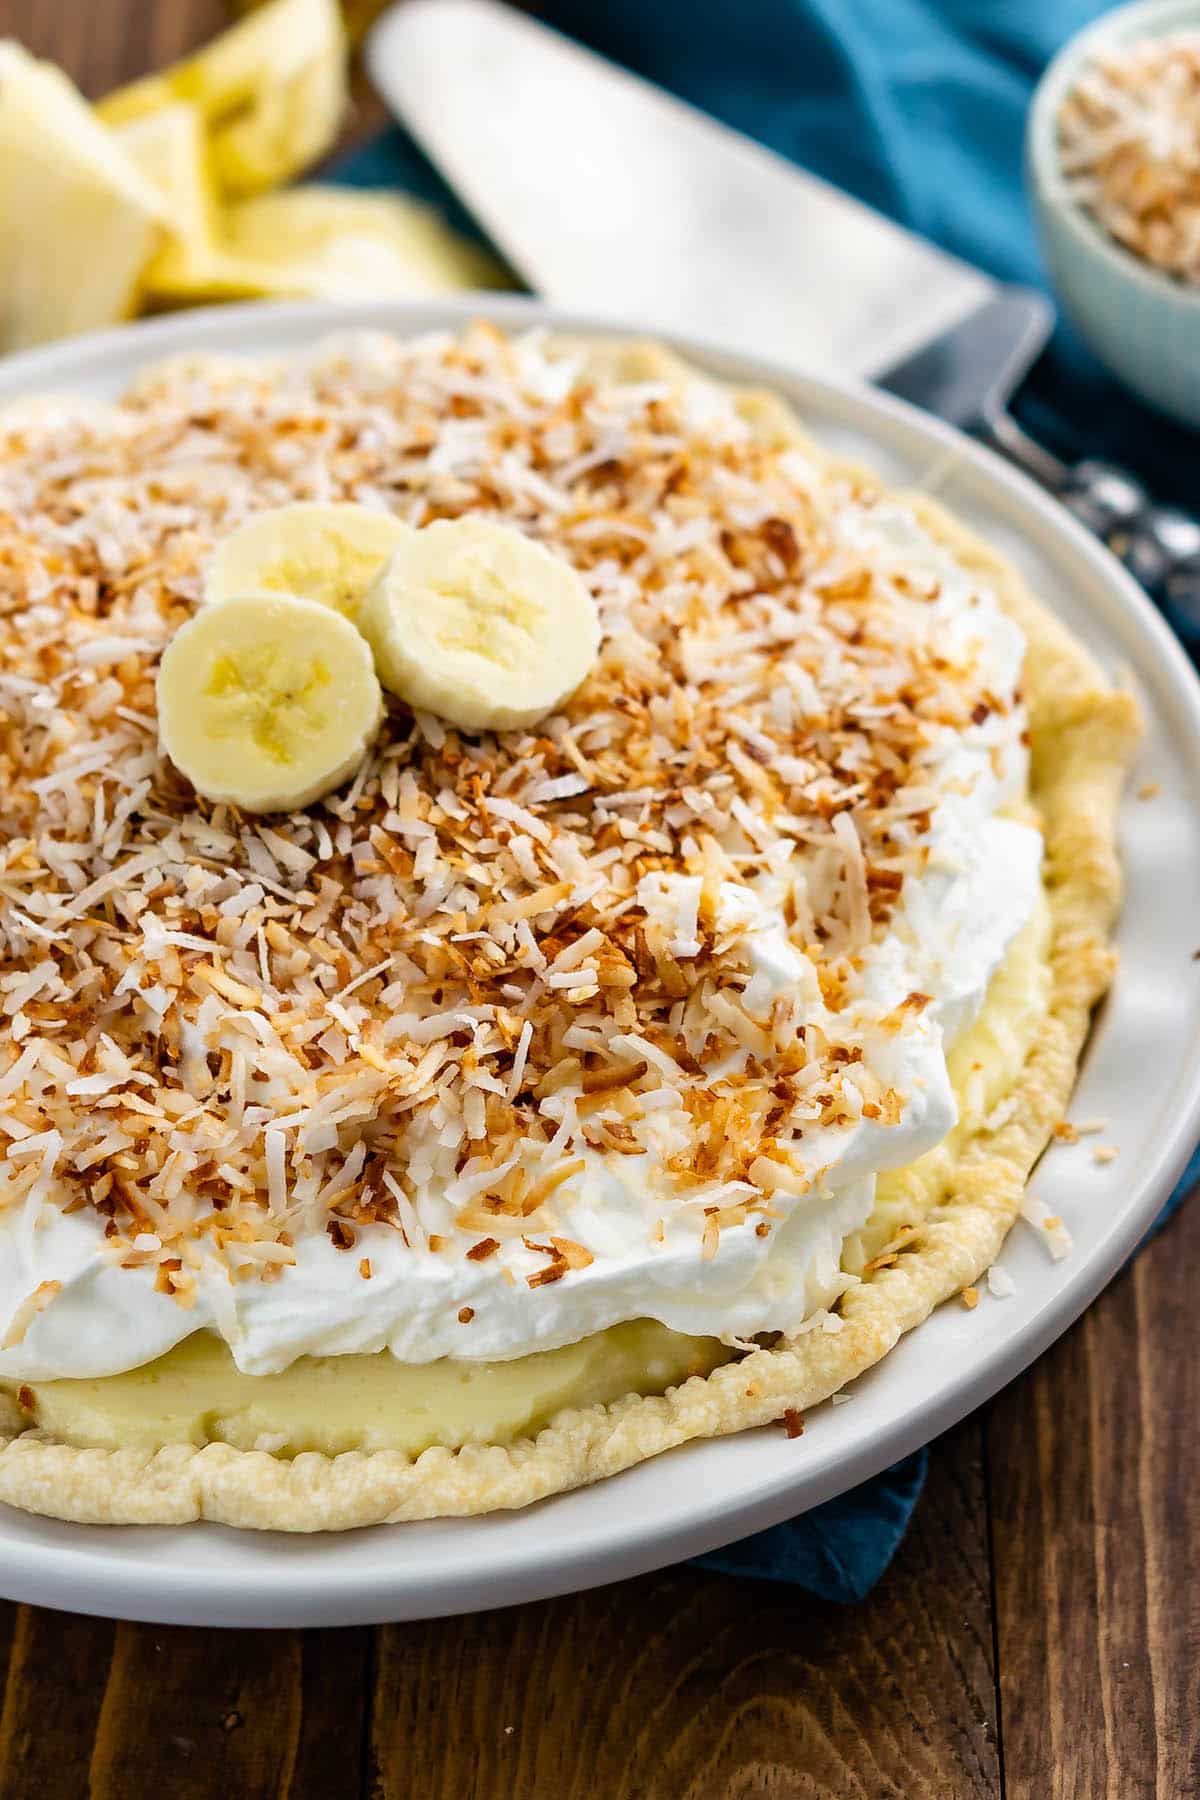 full banana cream pie topped with shredded coconut and sliced bananas.